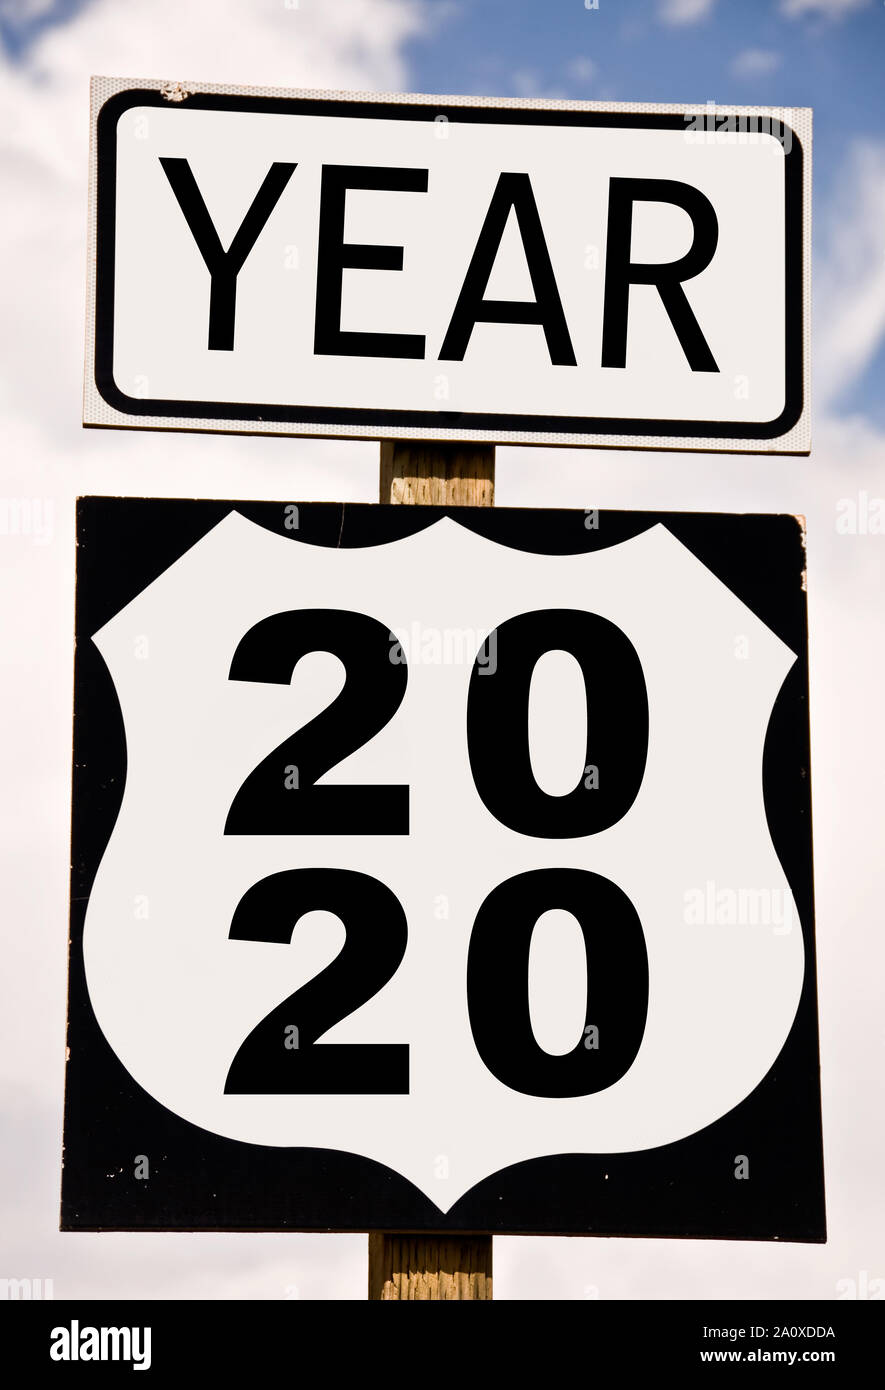 Year 2020 written on american roadsign Stock Photo